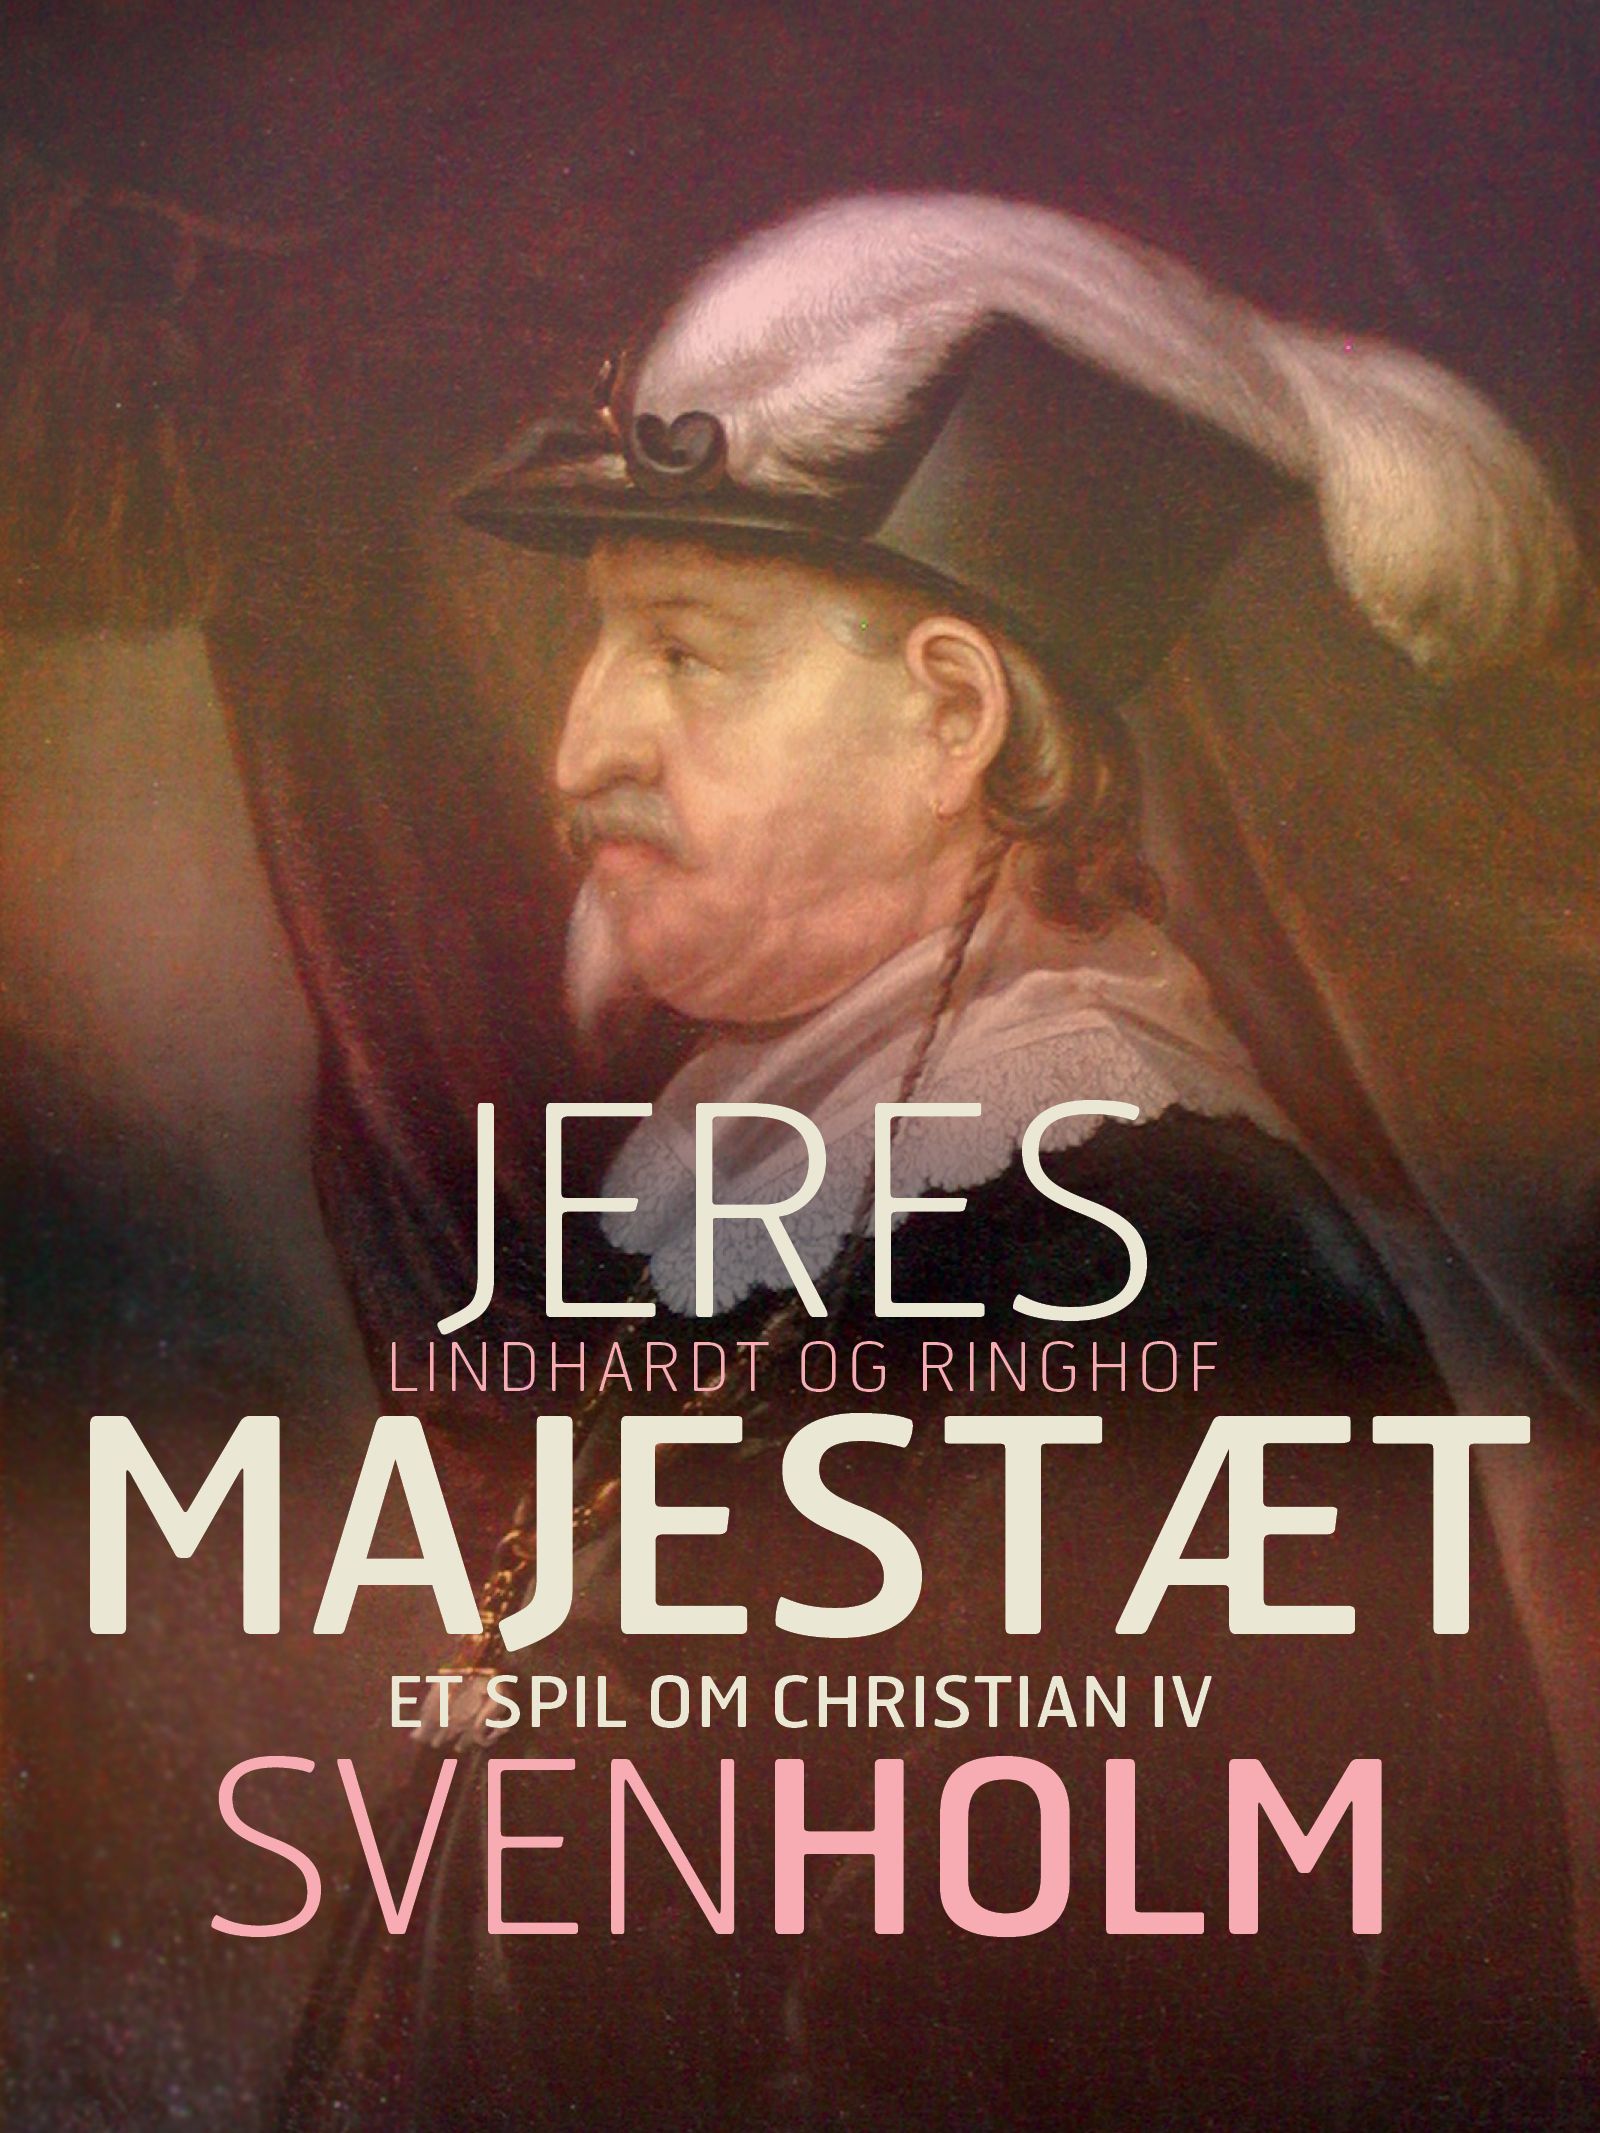 Jeres majestæt, e-bok av Sven Holm